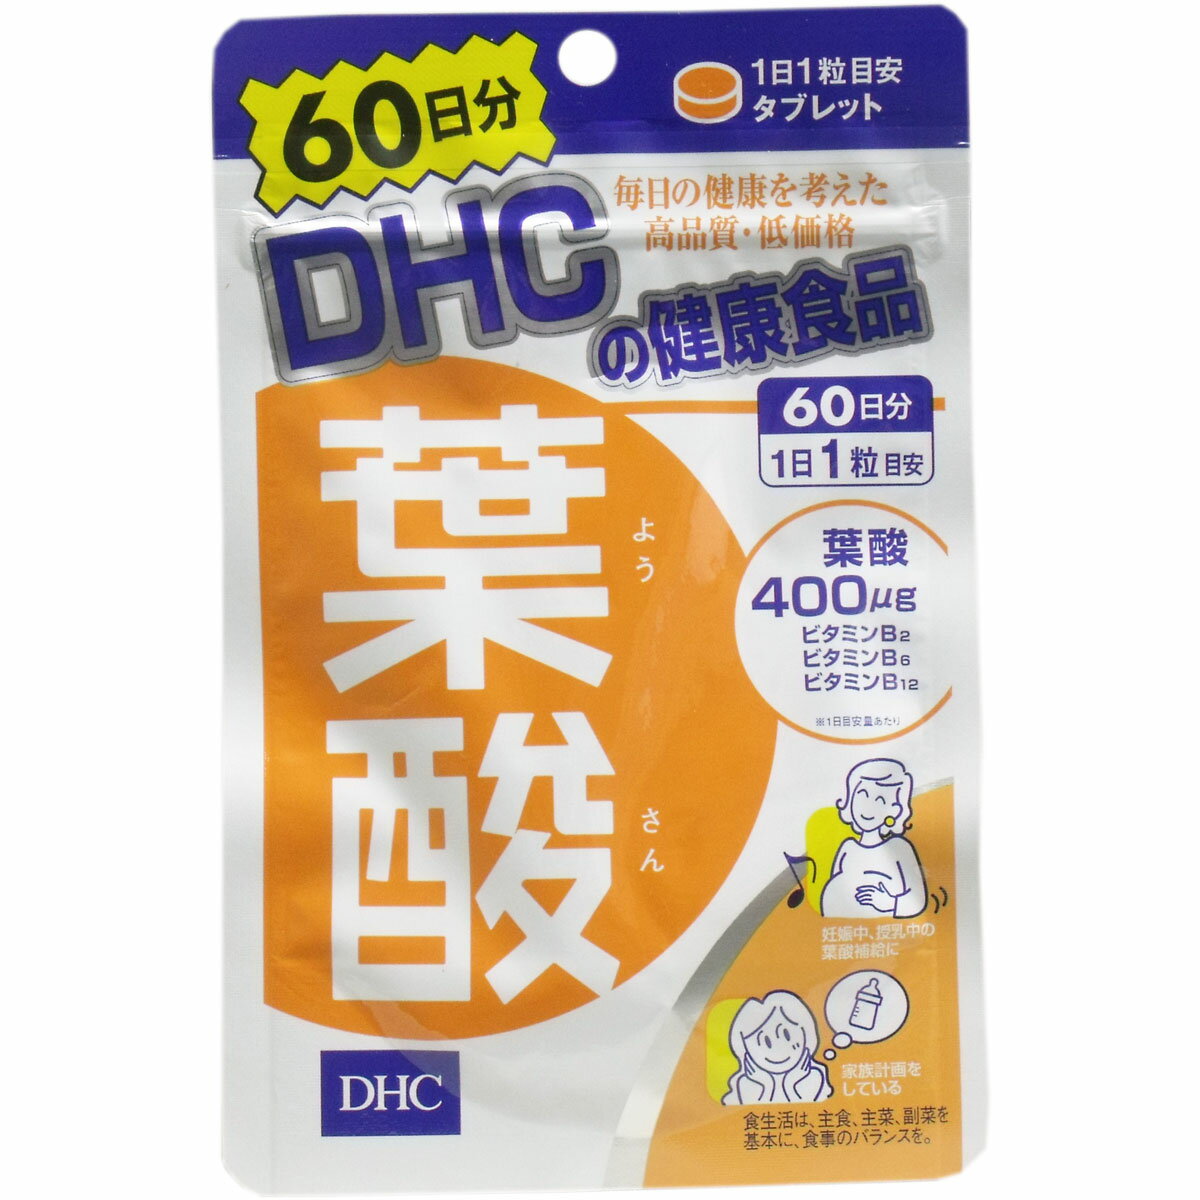 DHC葉酸 60日分 60粒入 【単品】 送料込み 北海道・沖縄・離島は別途送料 